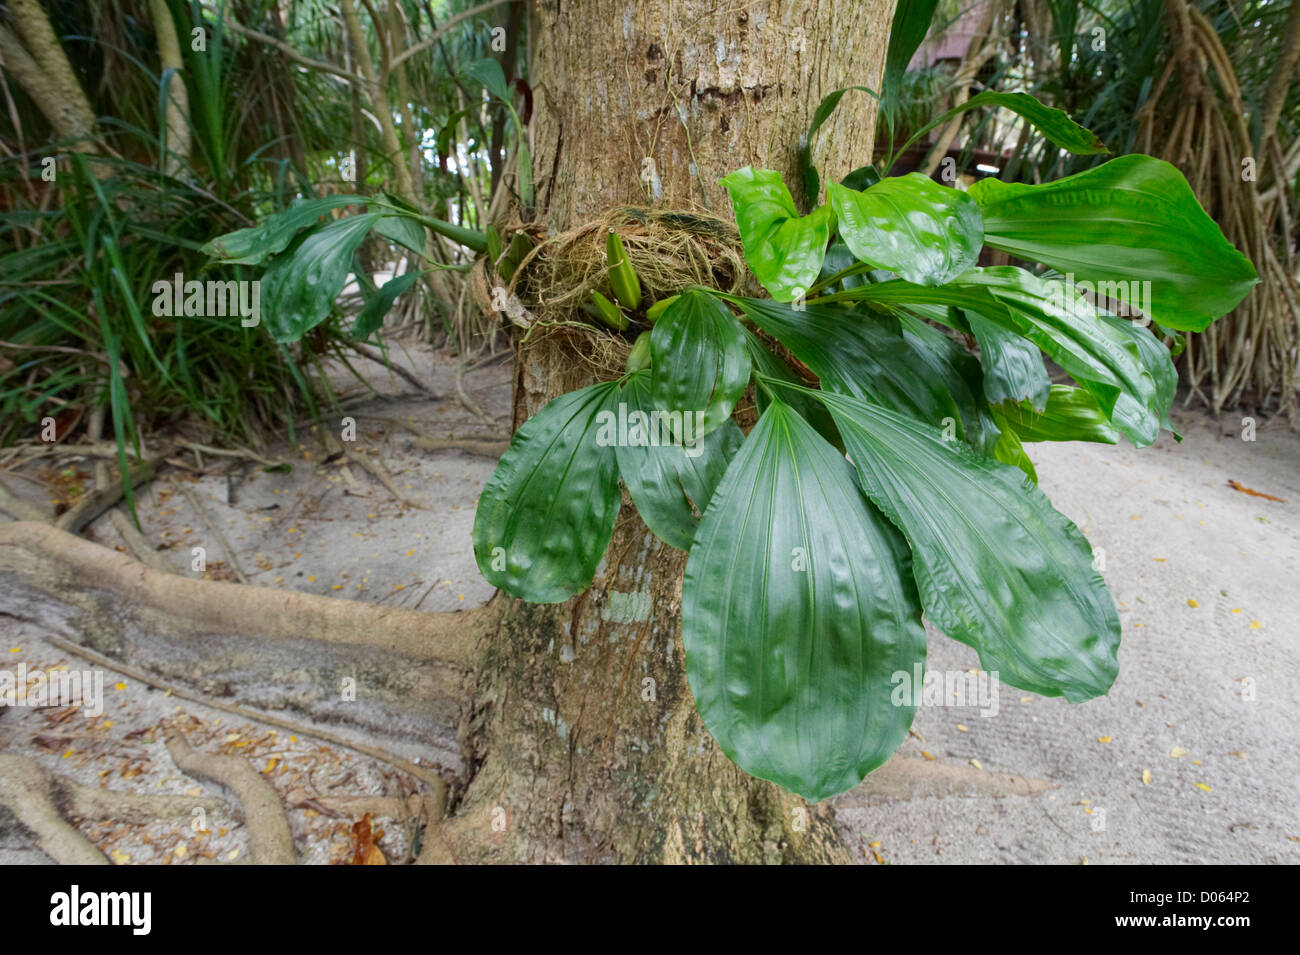 Calanthe growing on a tree trunk, Lankayan Island, Borneo Stock Photo